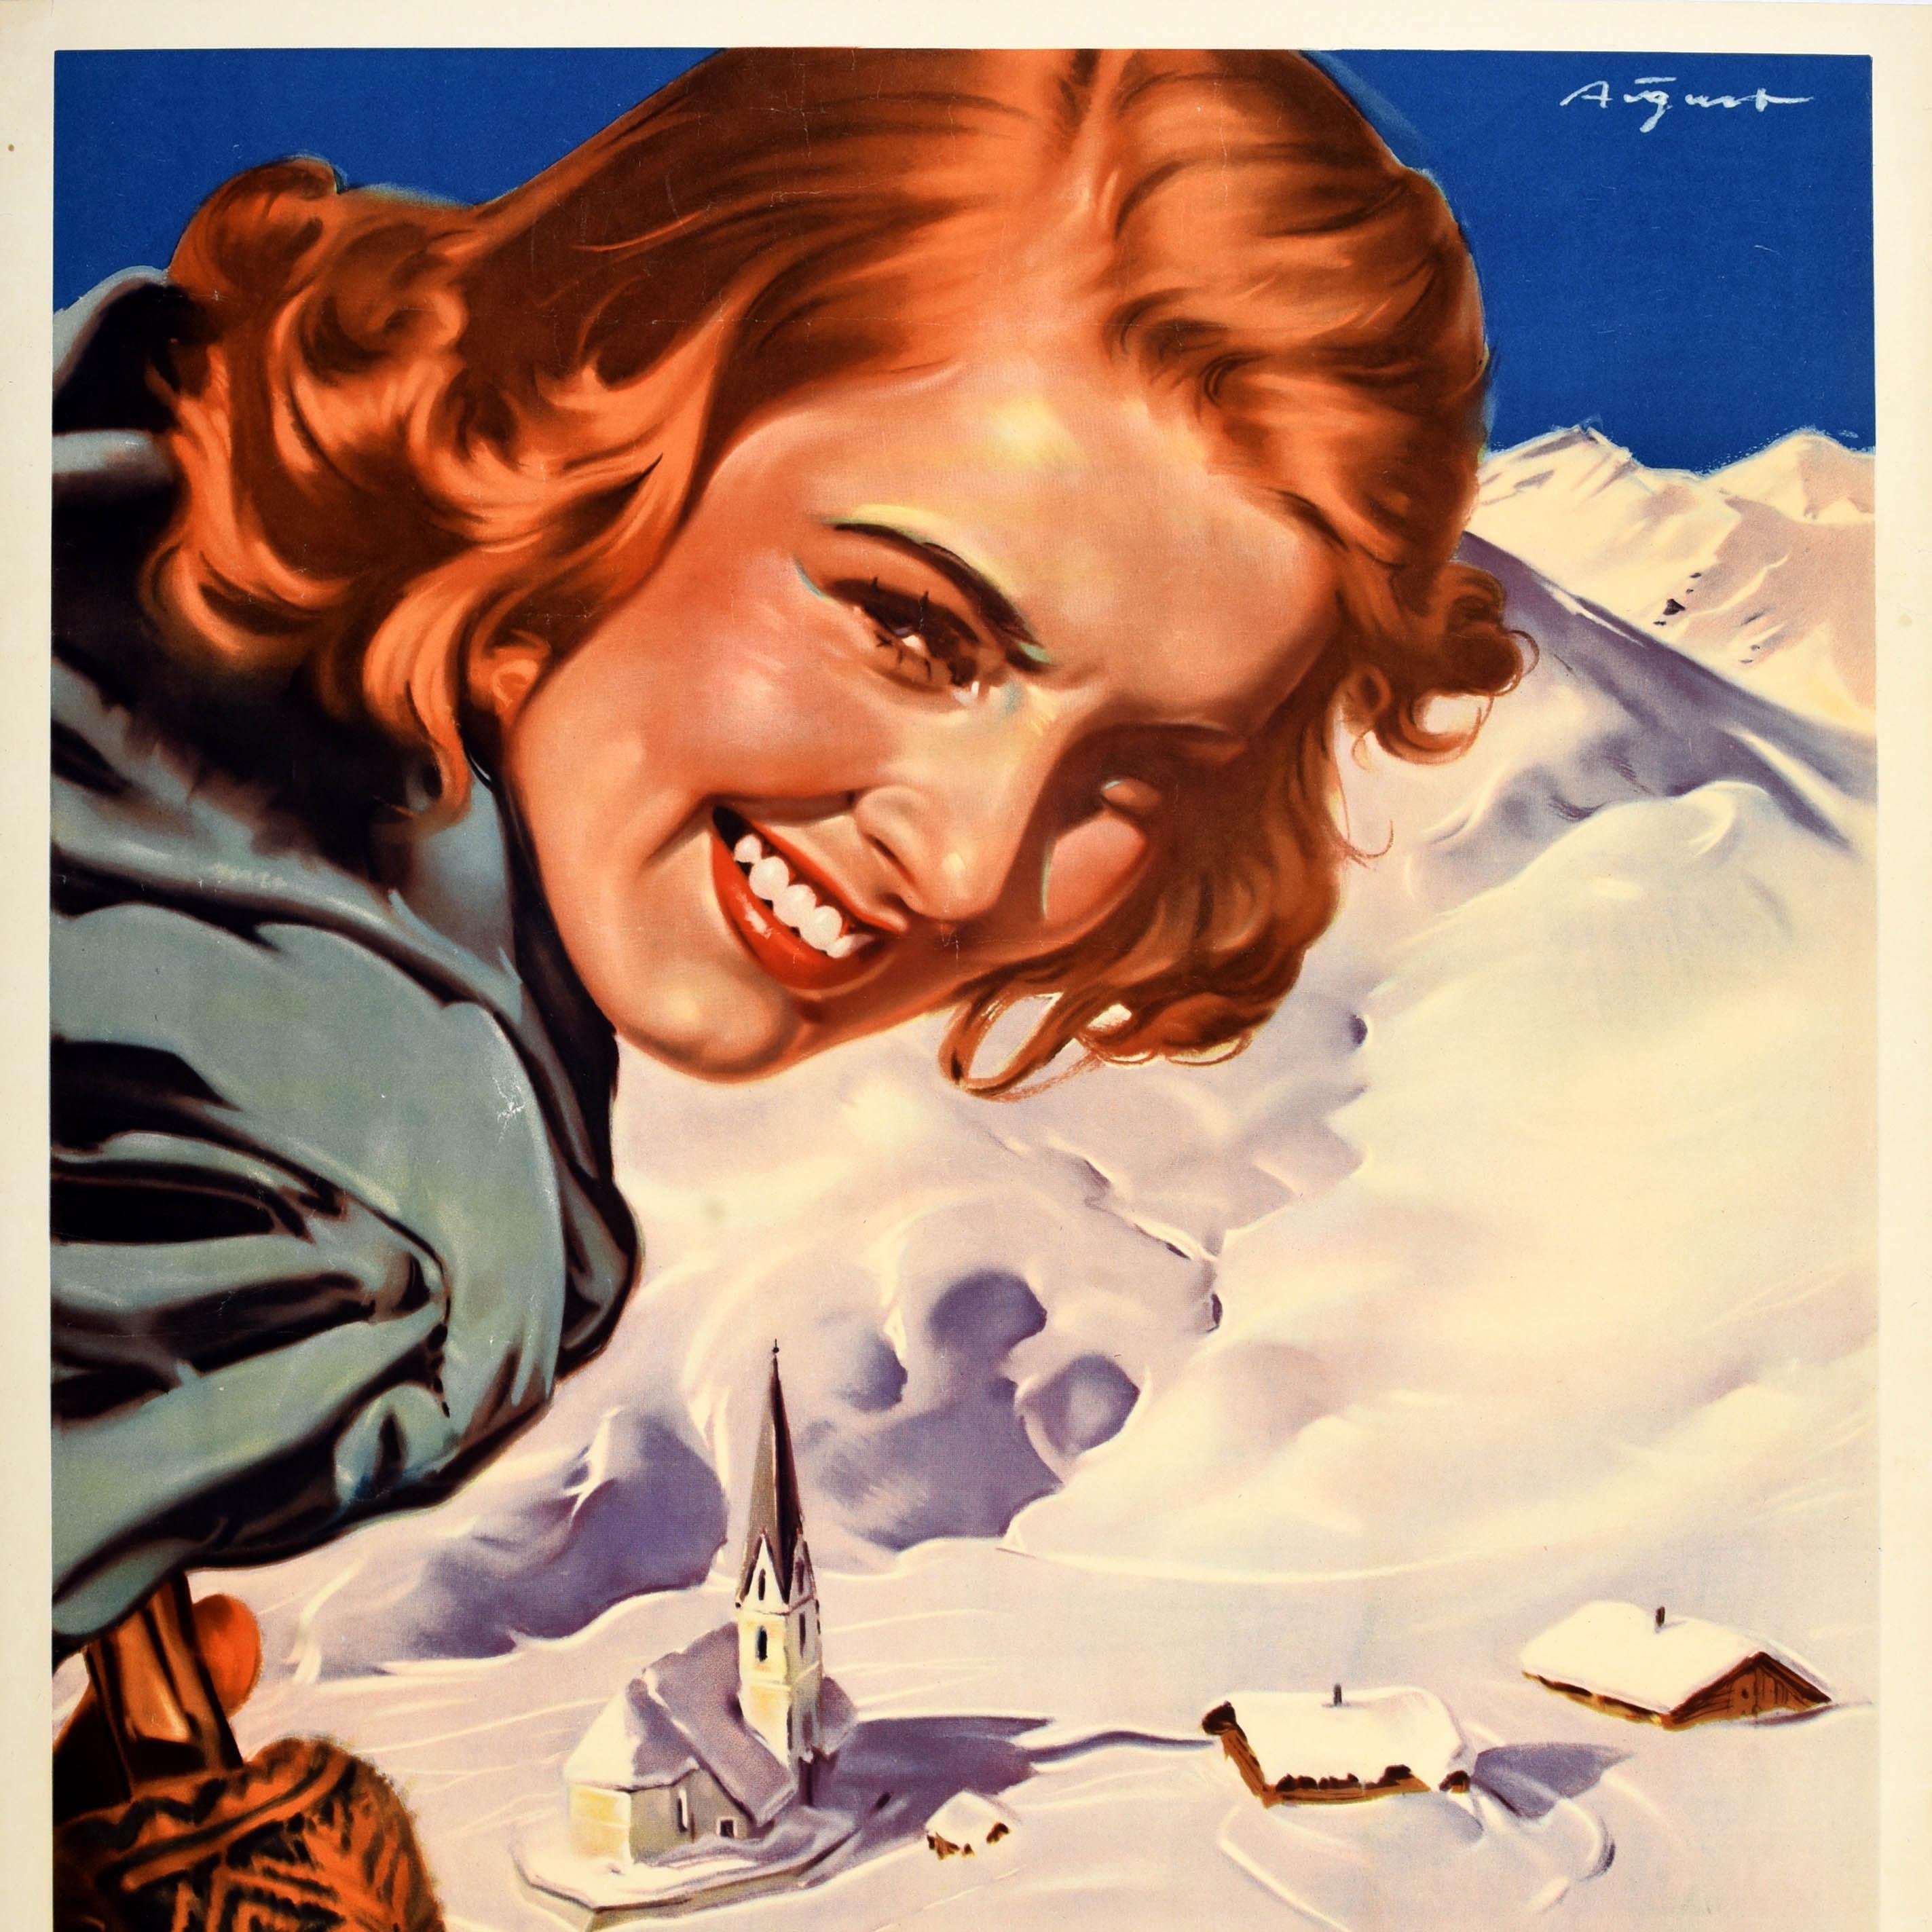 Austrian Original Vintage Skiing Travel Poster Winter Sports in Austria Paul Aigner For Sale